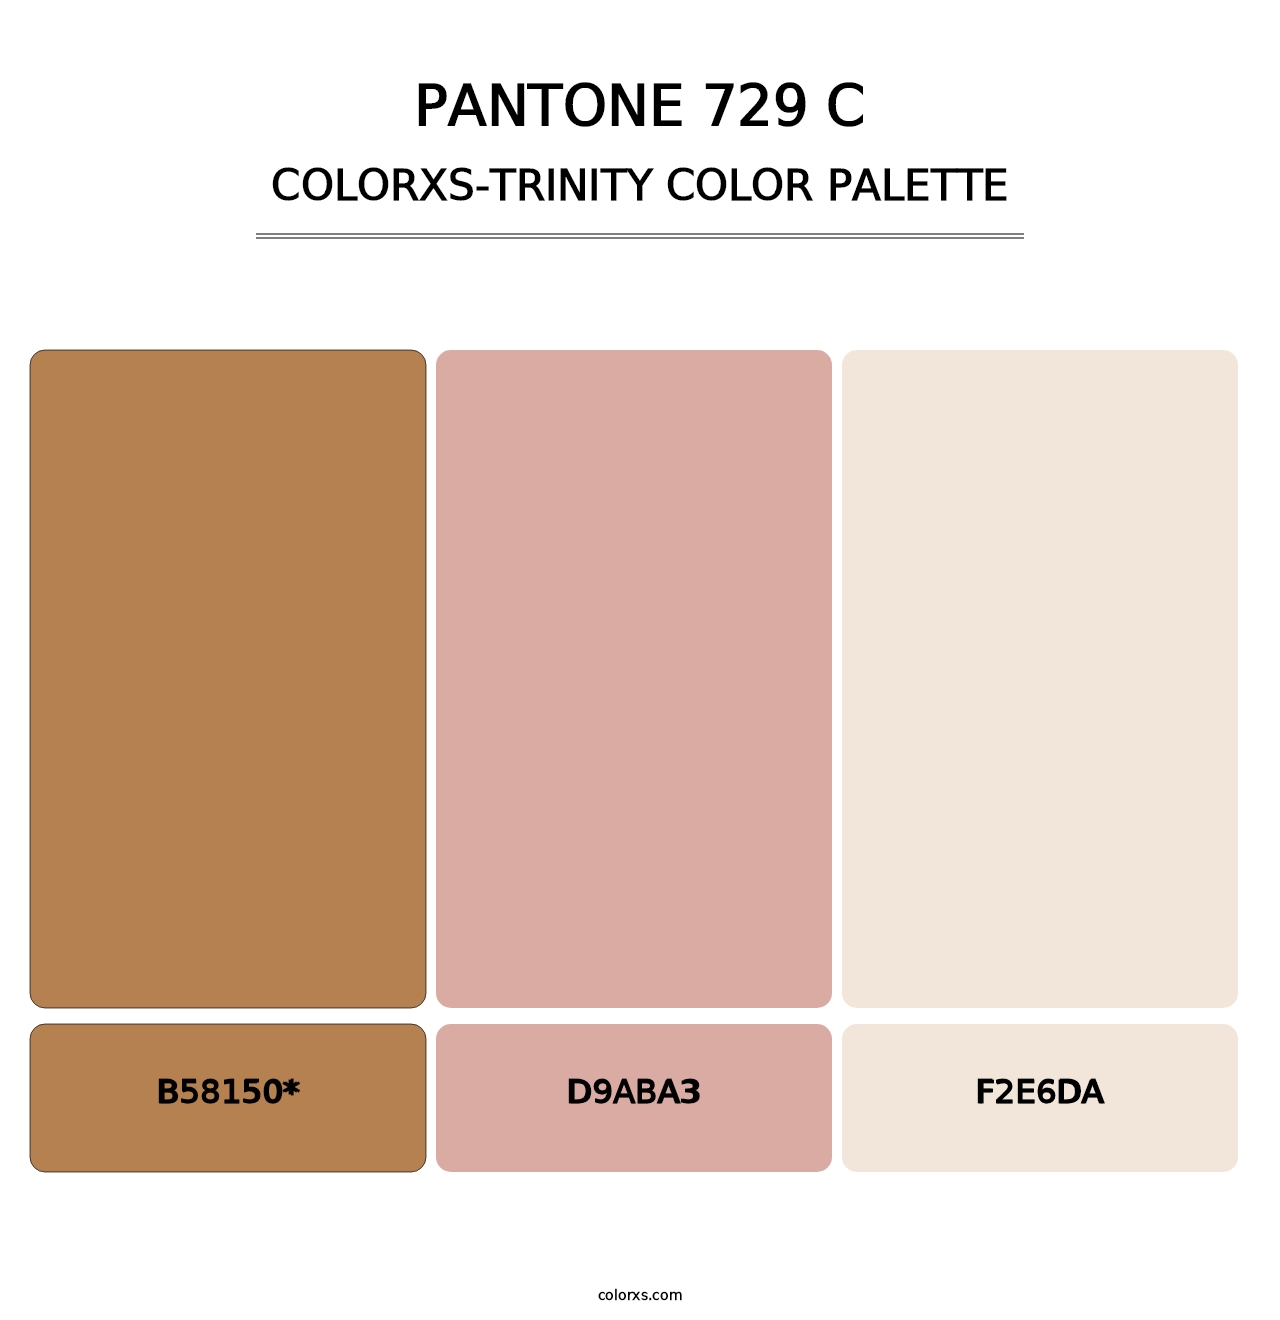 PANTONE 729 C - Colorxs Trinity Palette